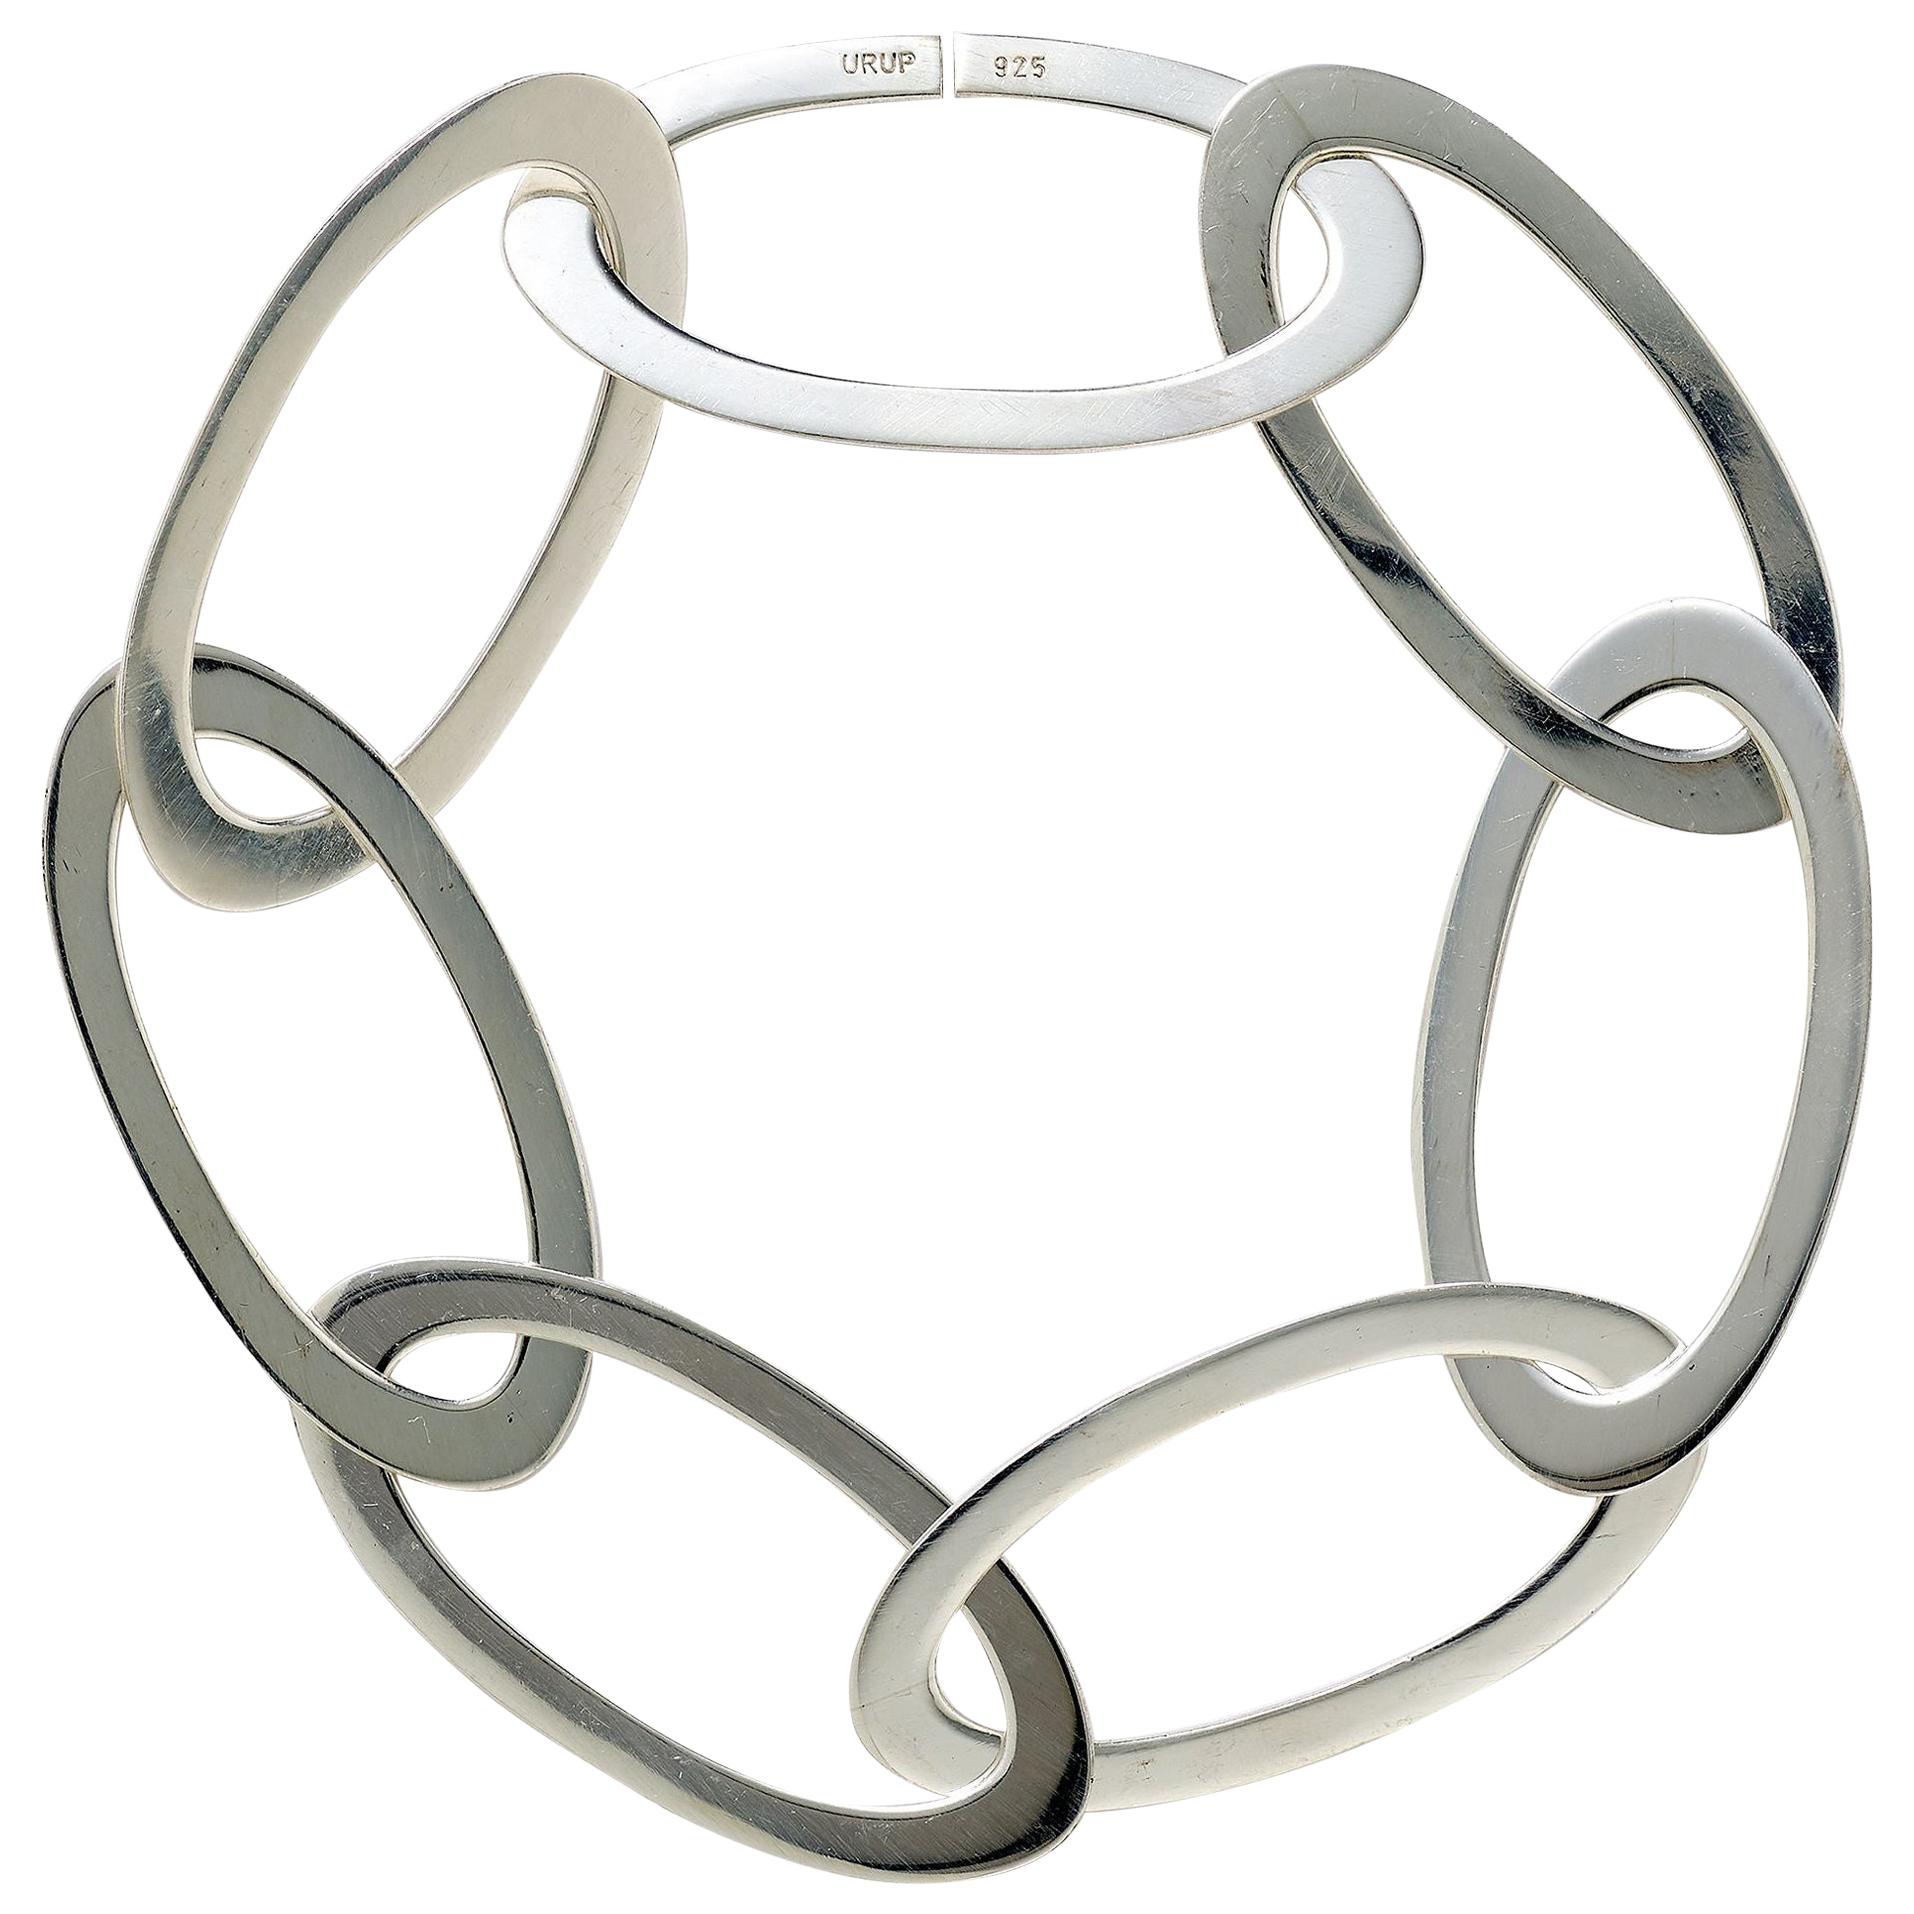 Sleek, Contemporary Flat Oval Link Sterling Silver Bracelet